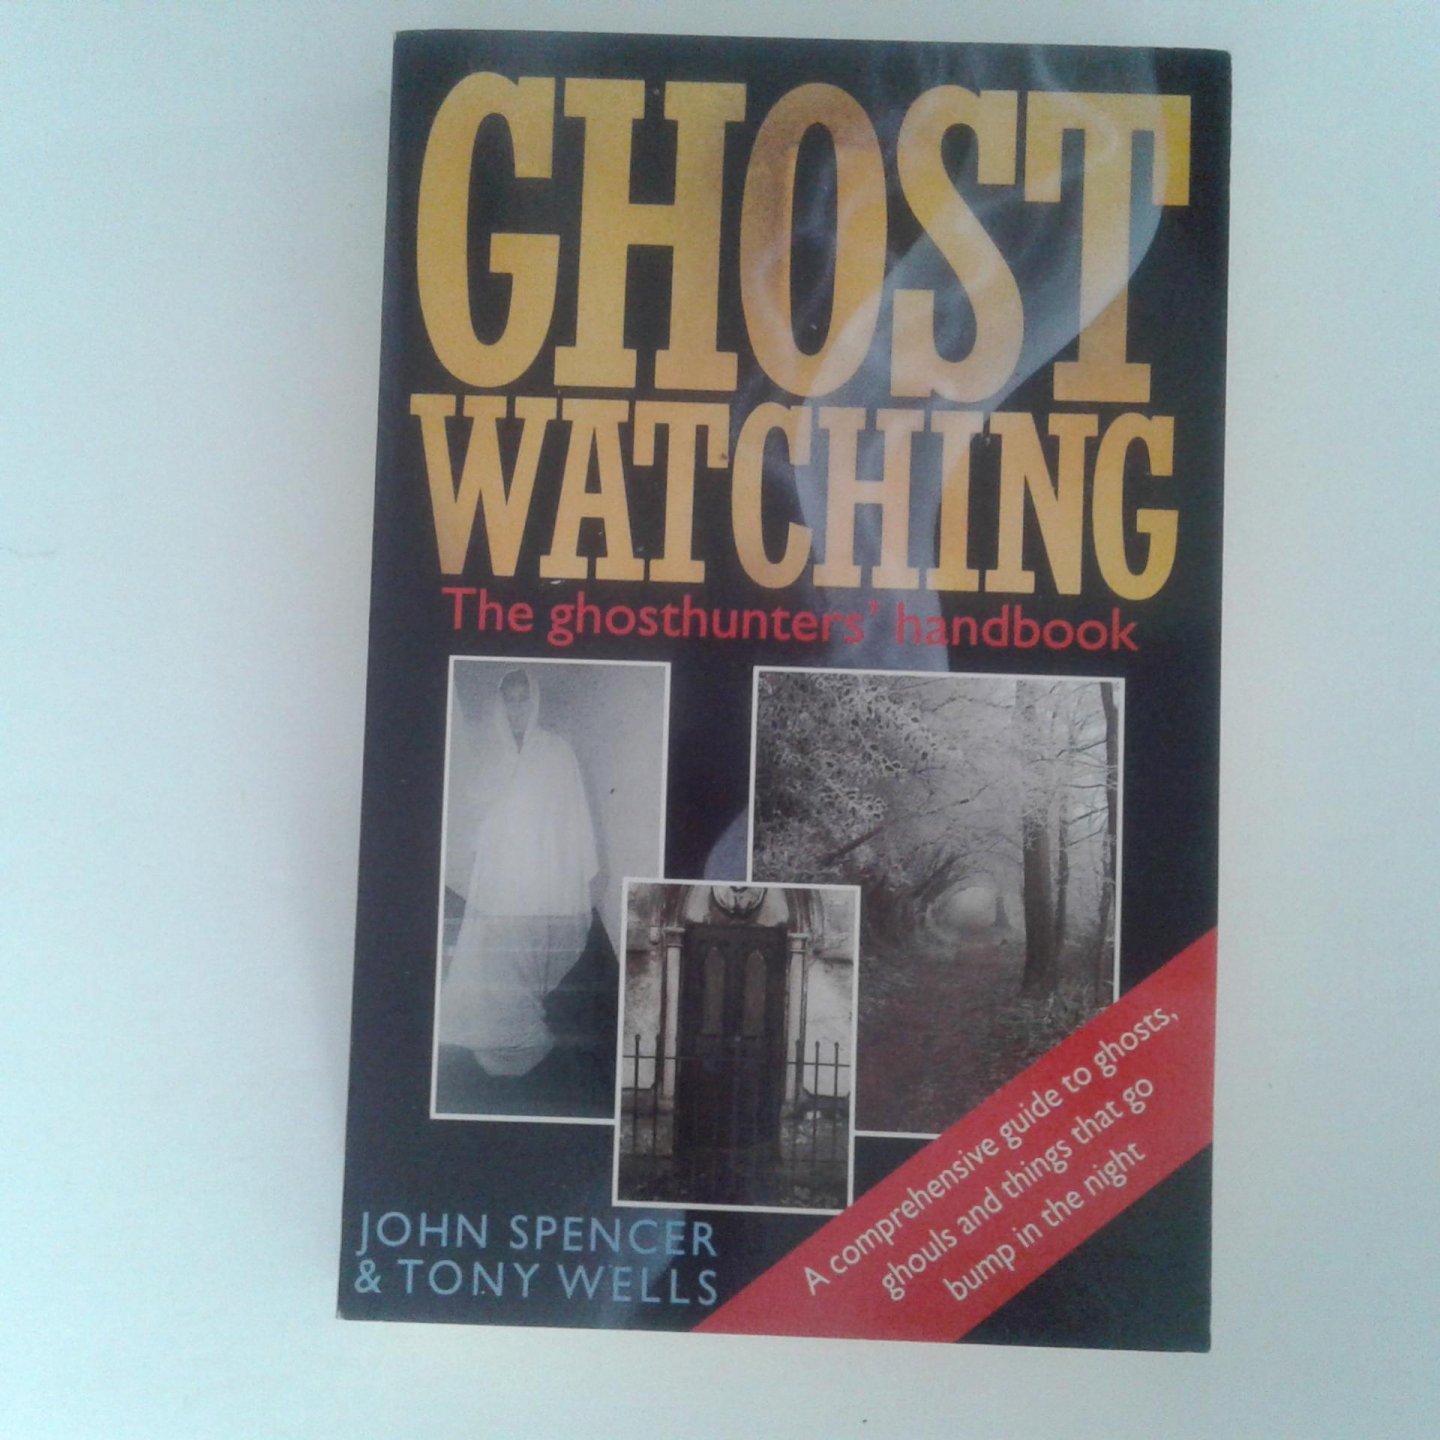 Spencer, John ; Tony Wells - Ghost Watching ; The Ghosthunter's handbook